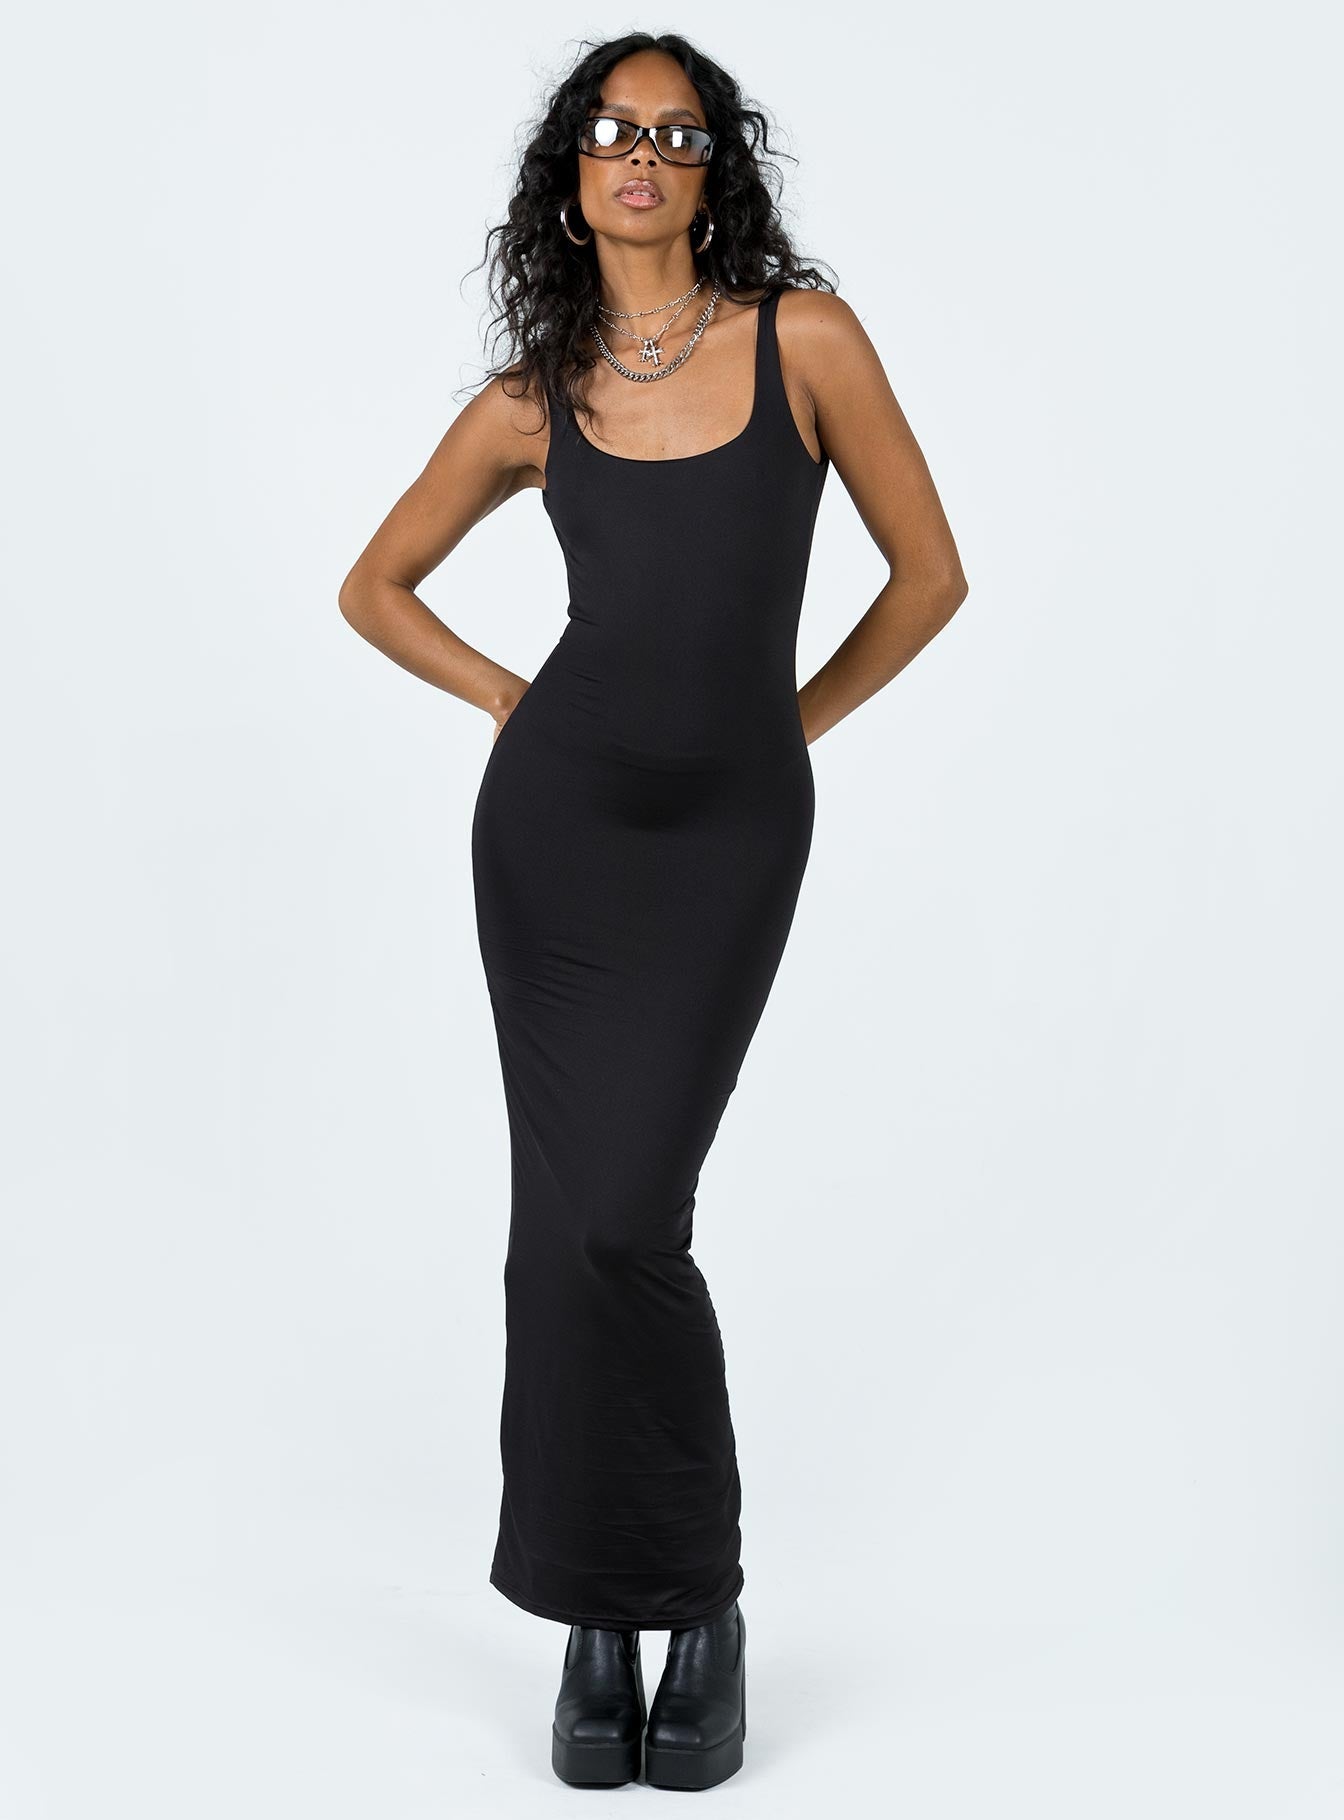 Shop Formal Dress - Castling Maxi Dress Black sixth image